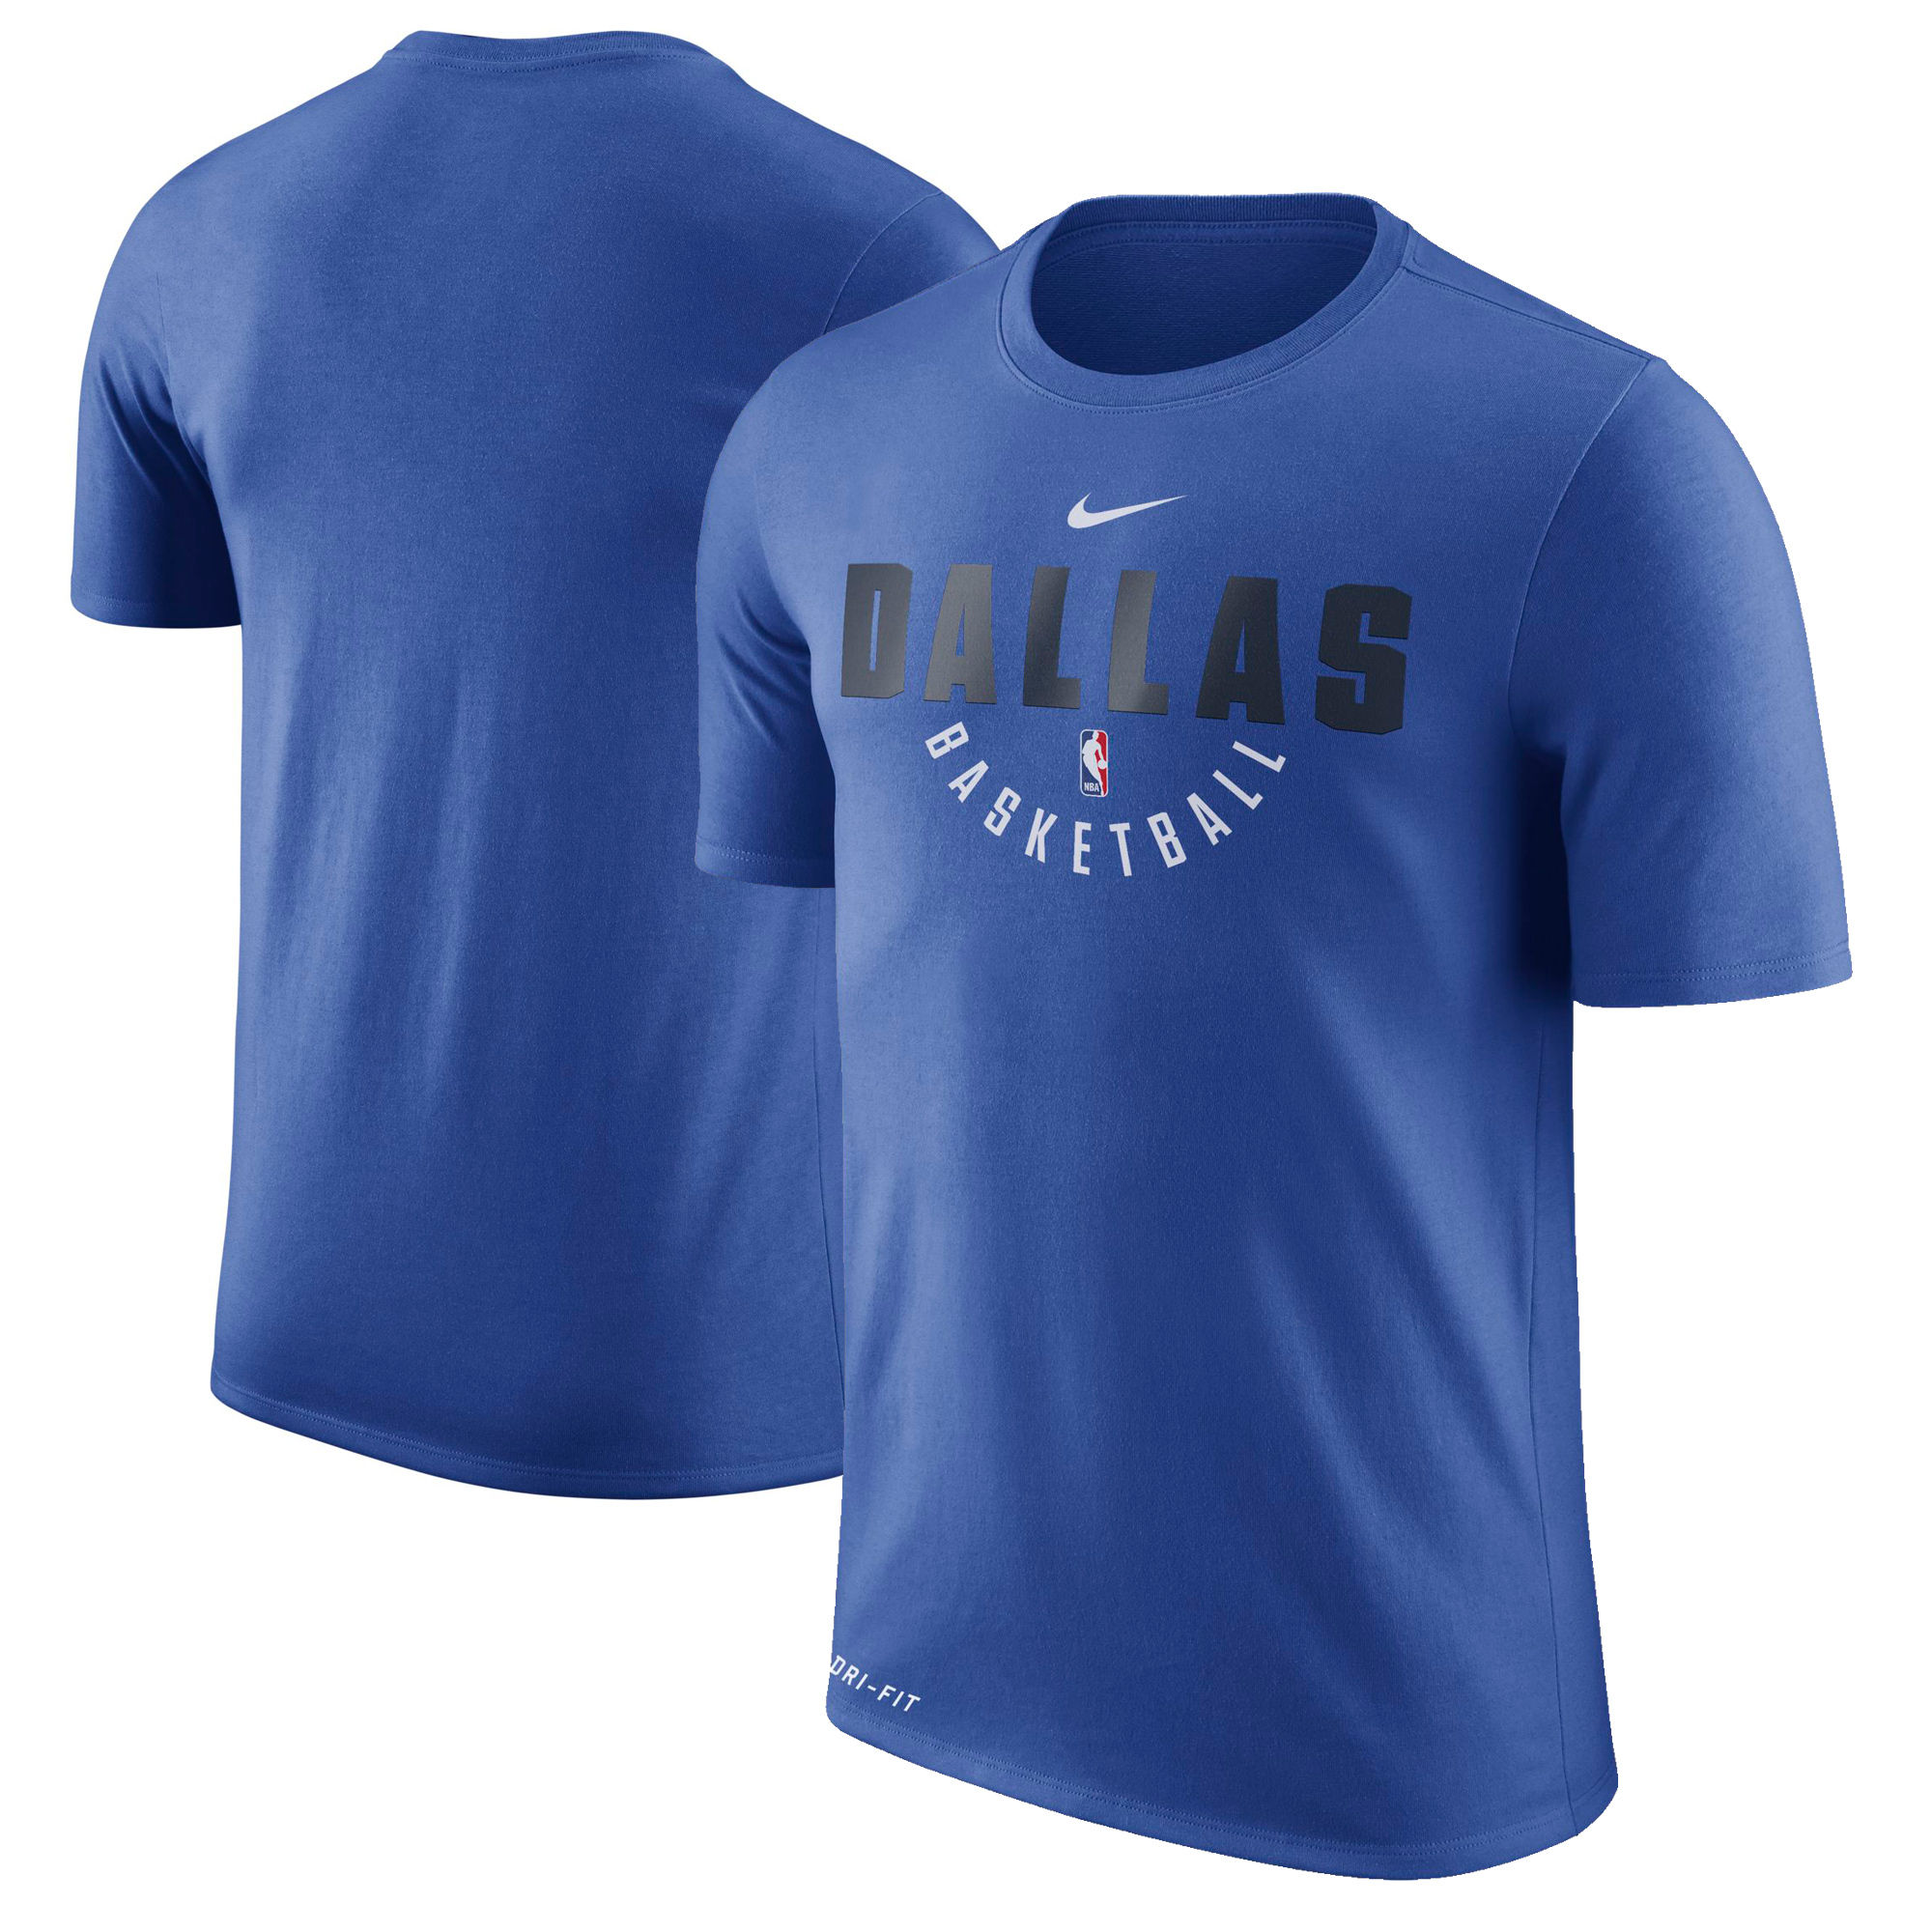 Dallas Mavericks Nike Blue Practice Performance T-Shirt